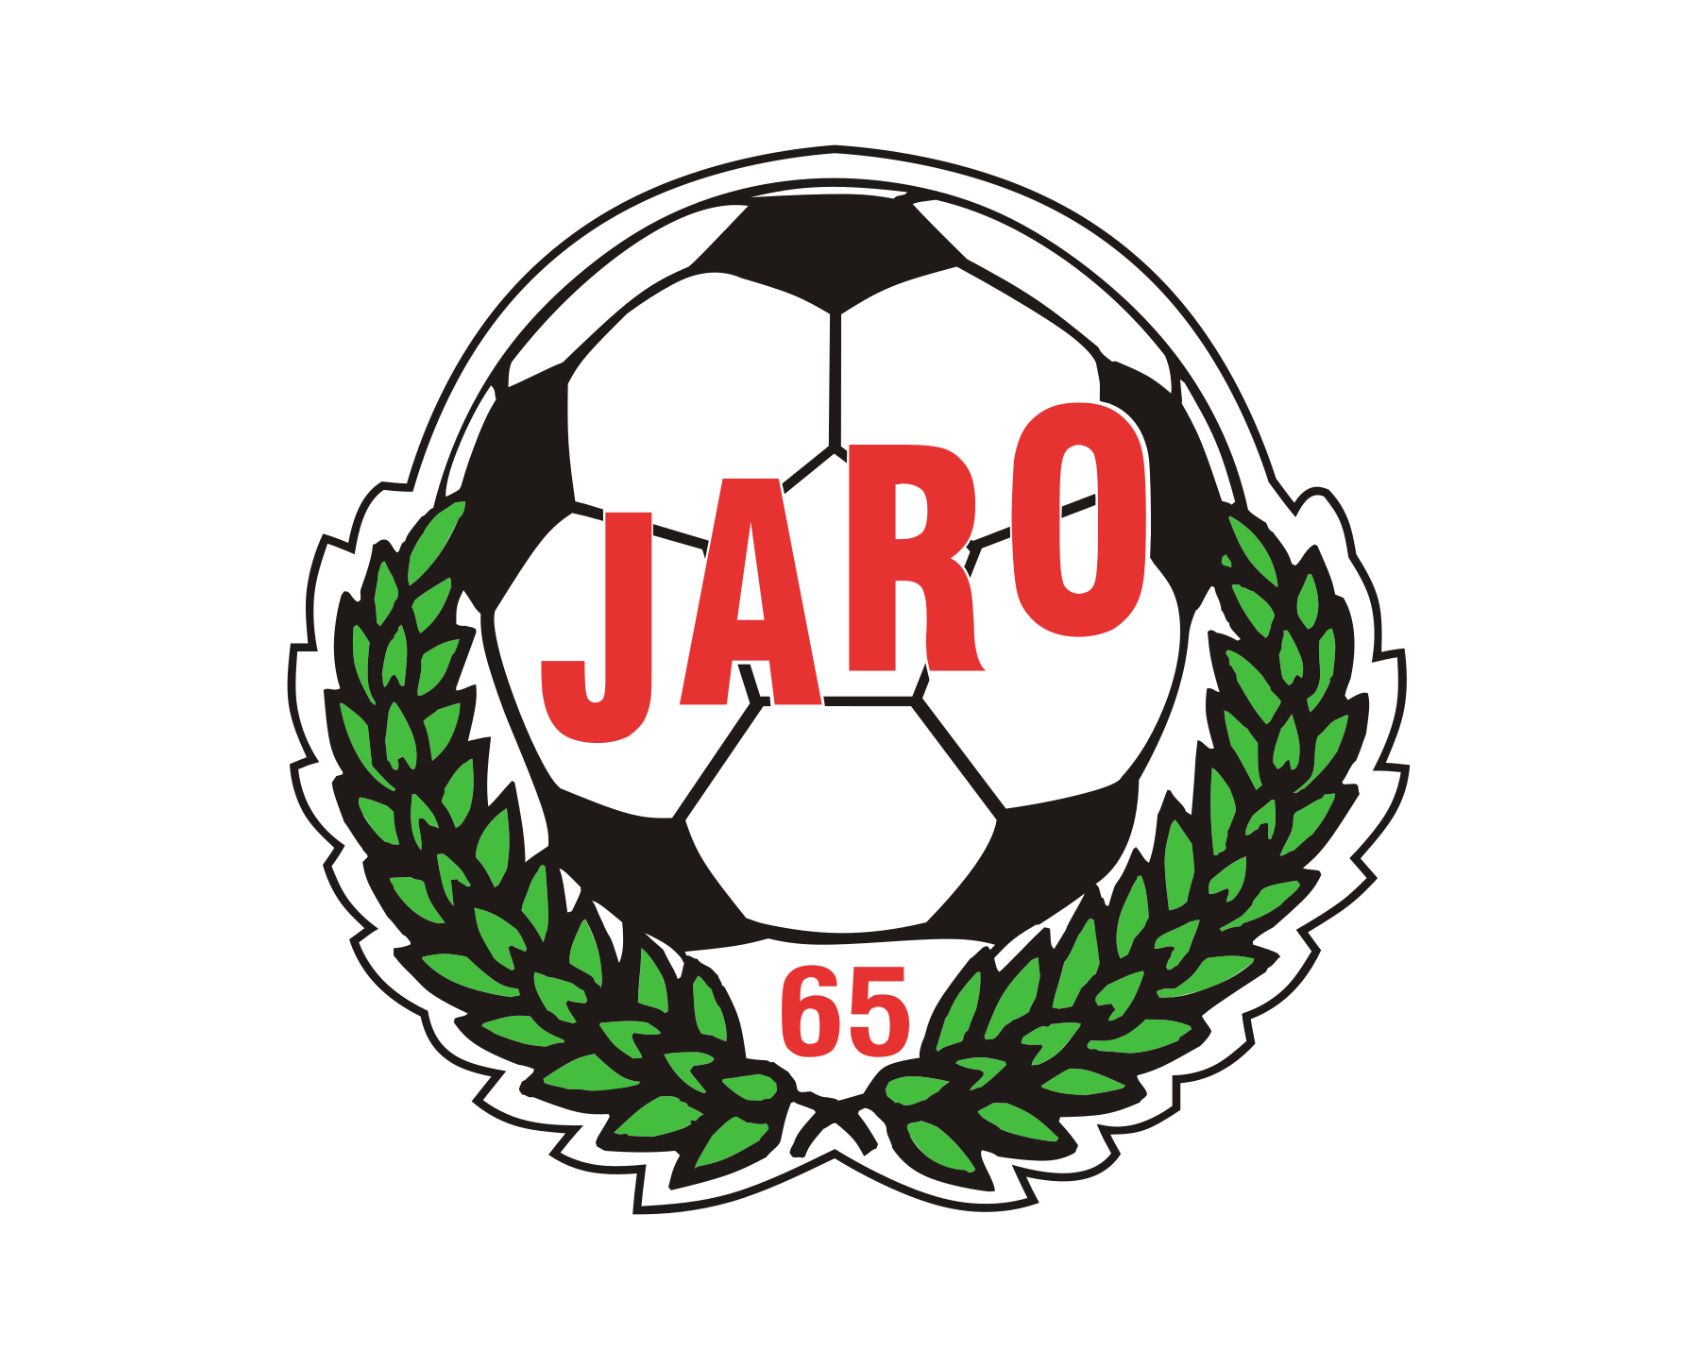 ff-jaro-19-football-club-facts